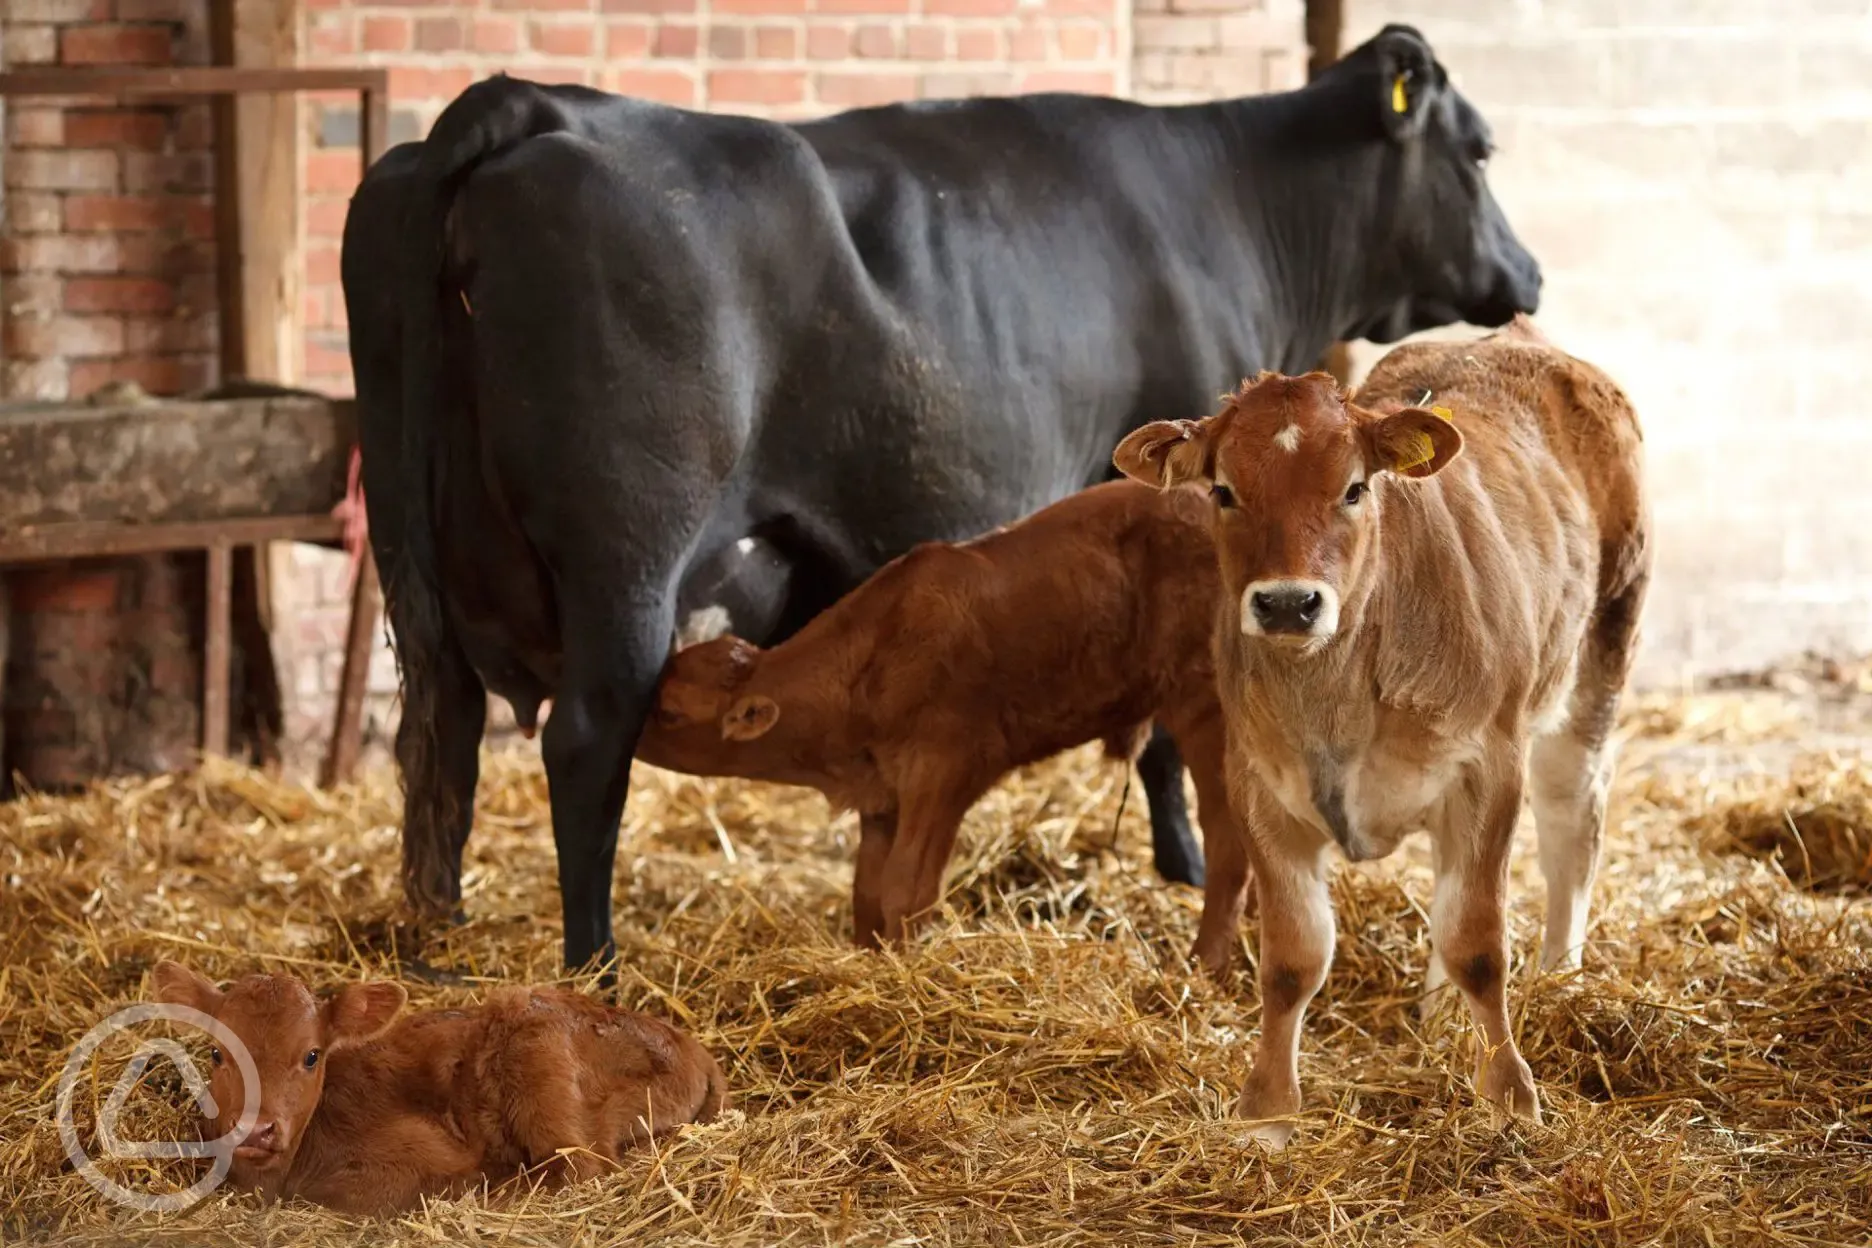 Farm setting with baby calves